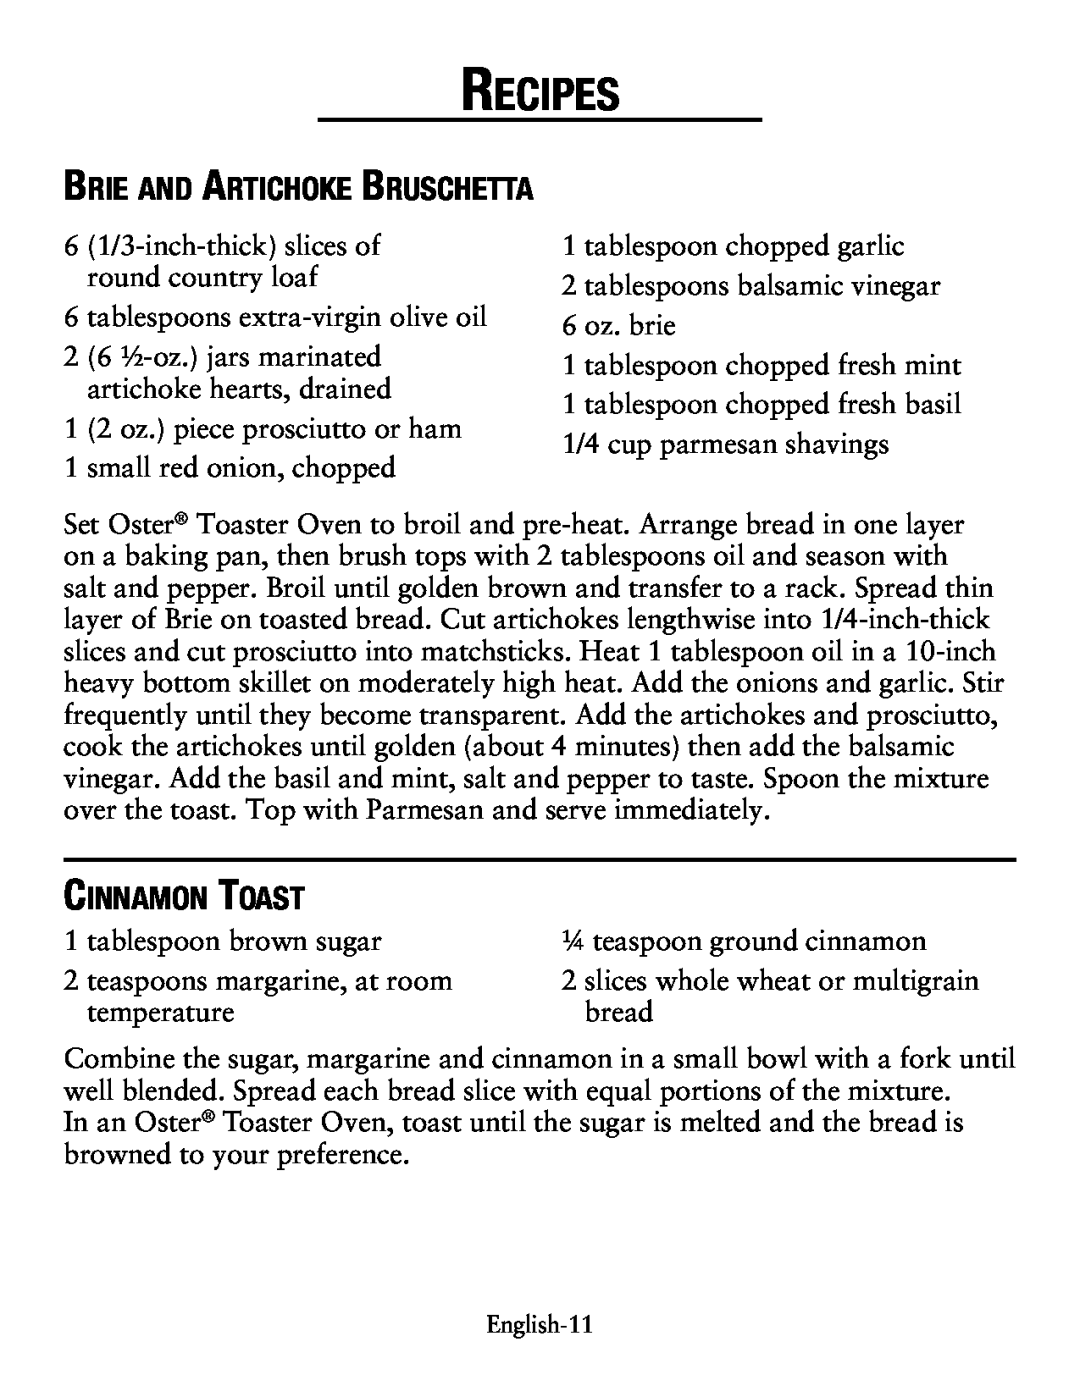 Oster tssttvcg02, countertop oven user manual Recipes, Brie and Artichoke Bruschetta, Cinnamon Toast 